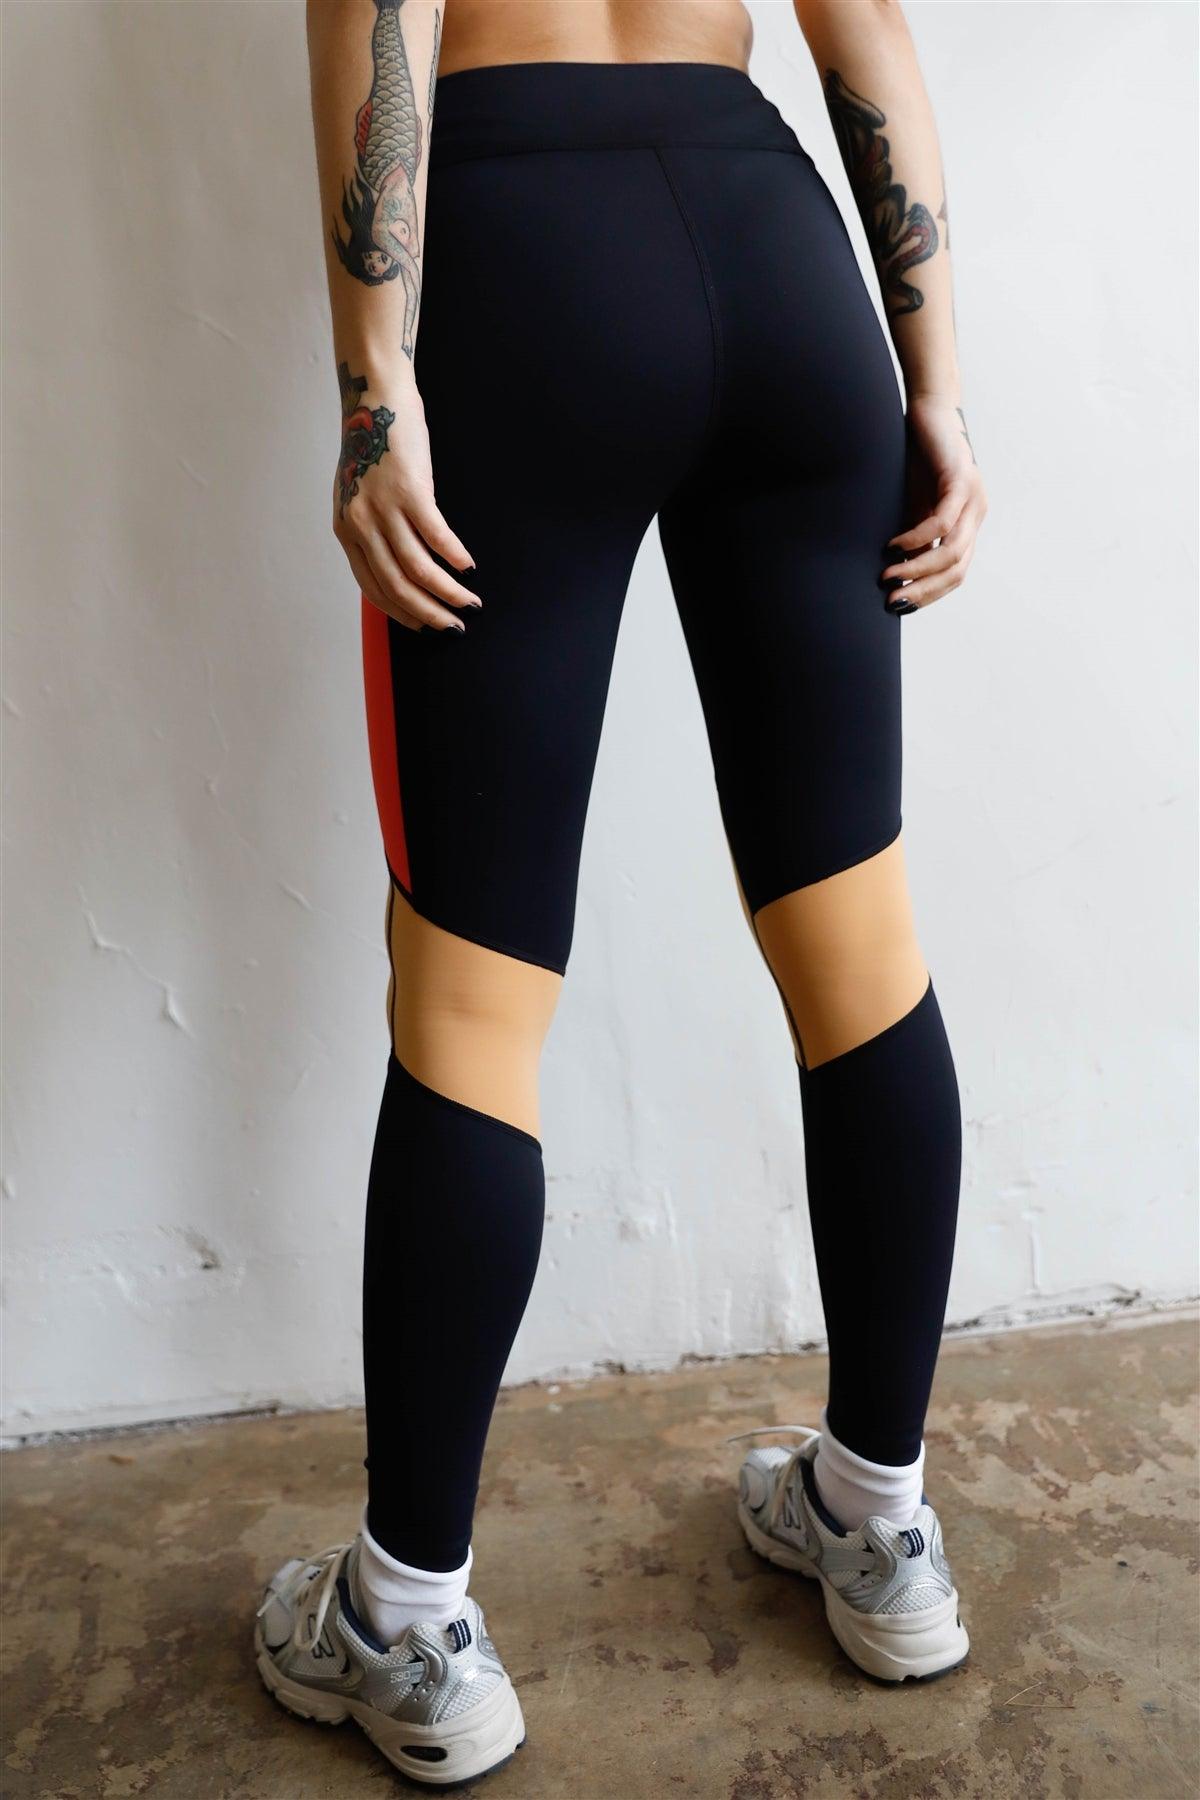 Black Multi Colorblock High Waist Legging Sport Activewear Pants /2-2-2